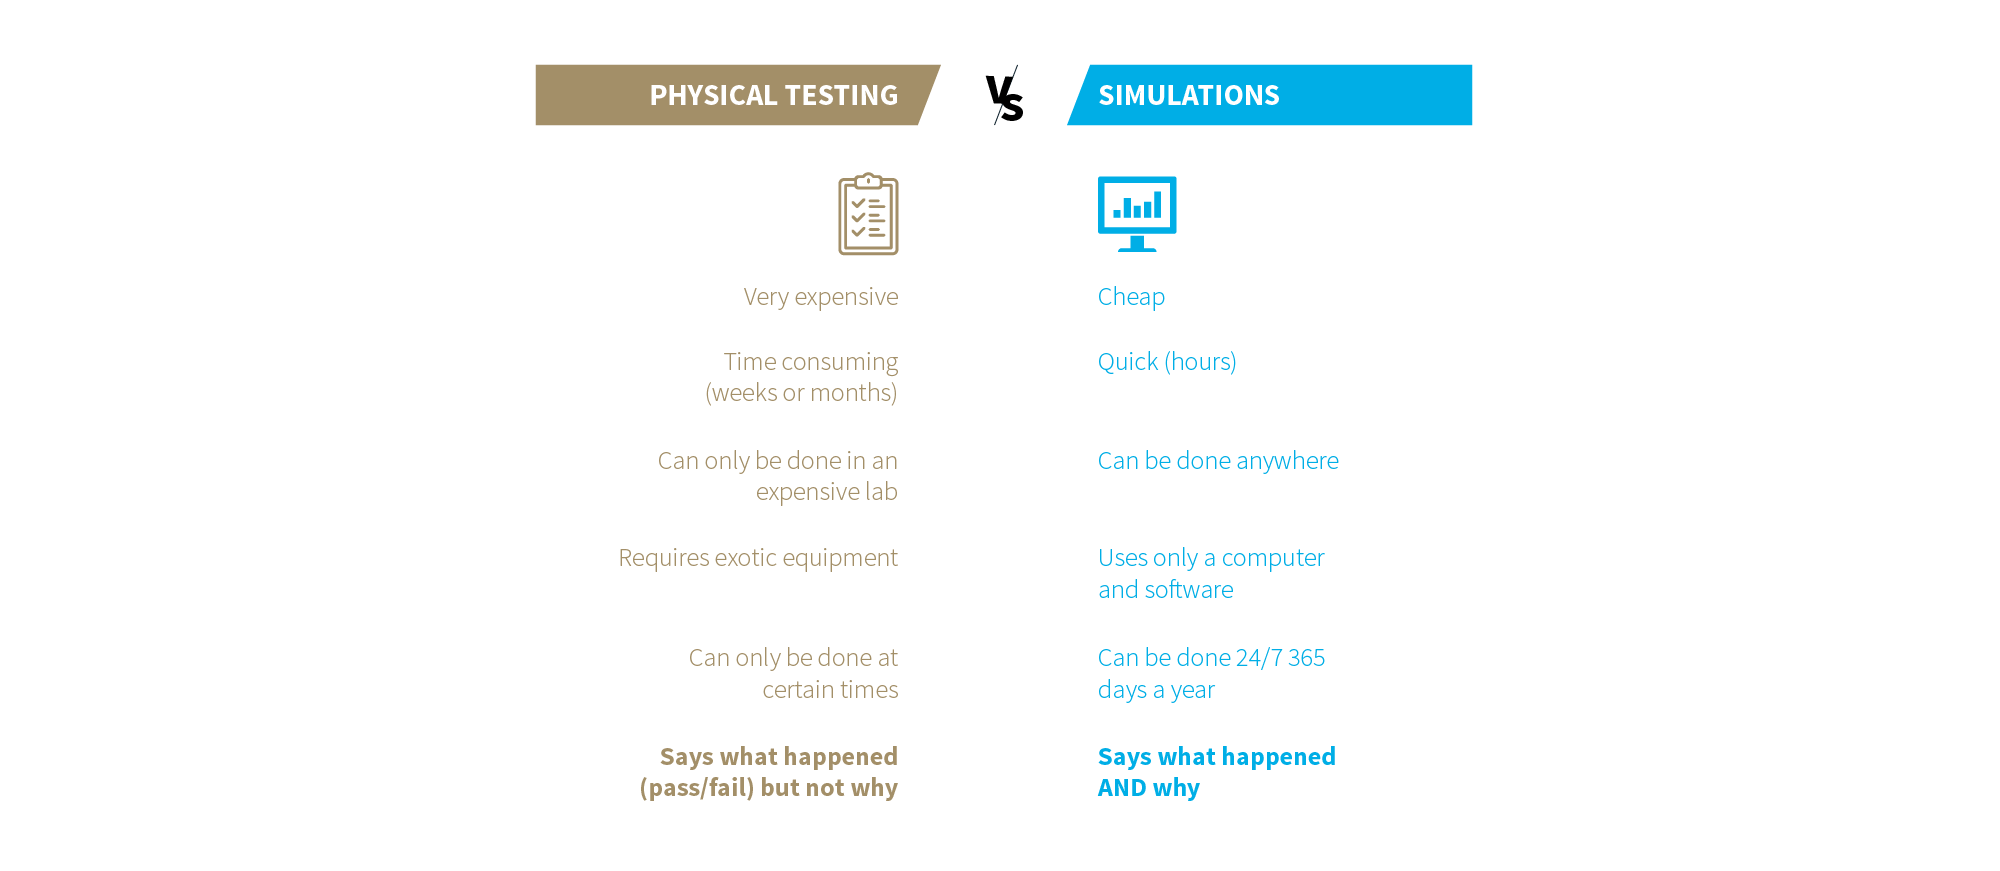 Physical testing vs simulations